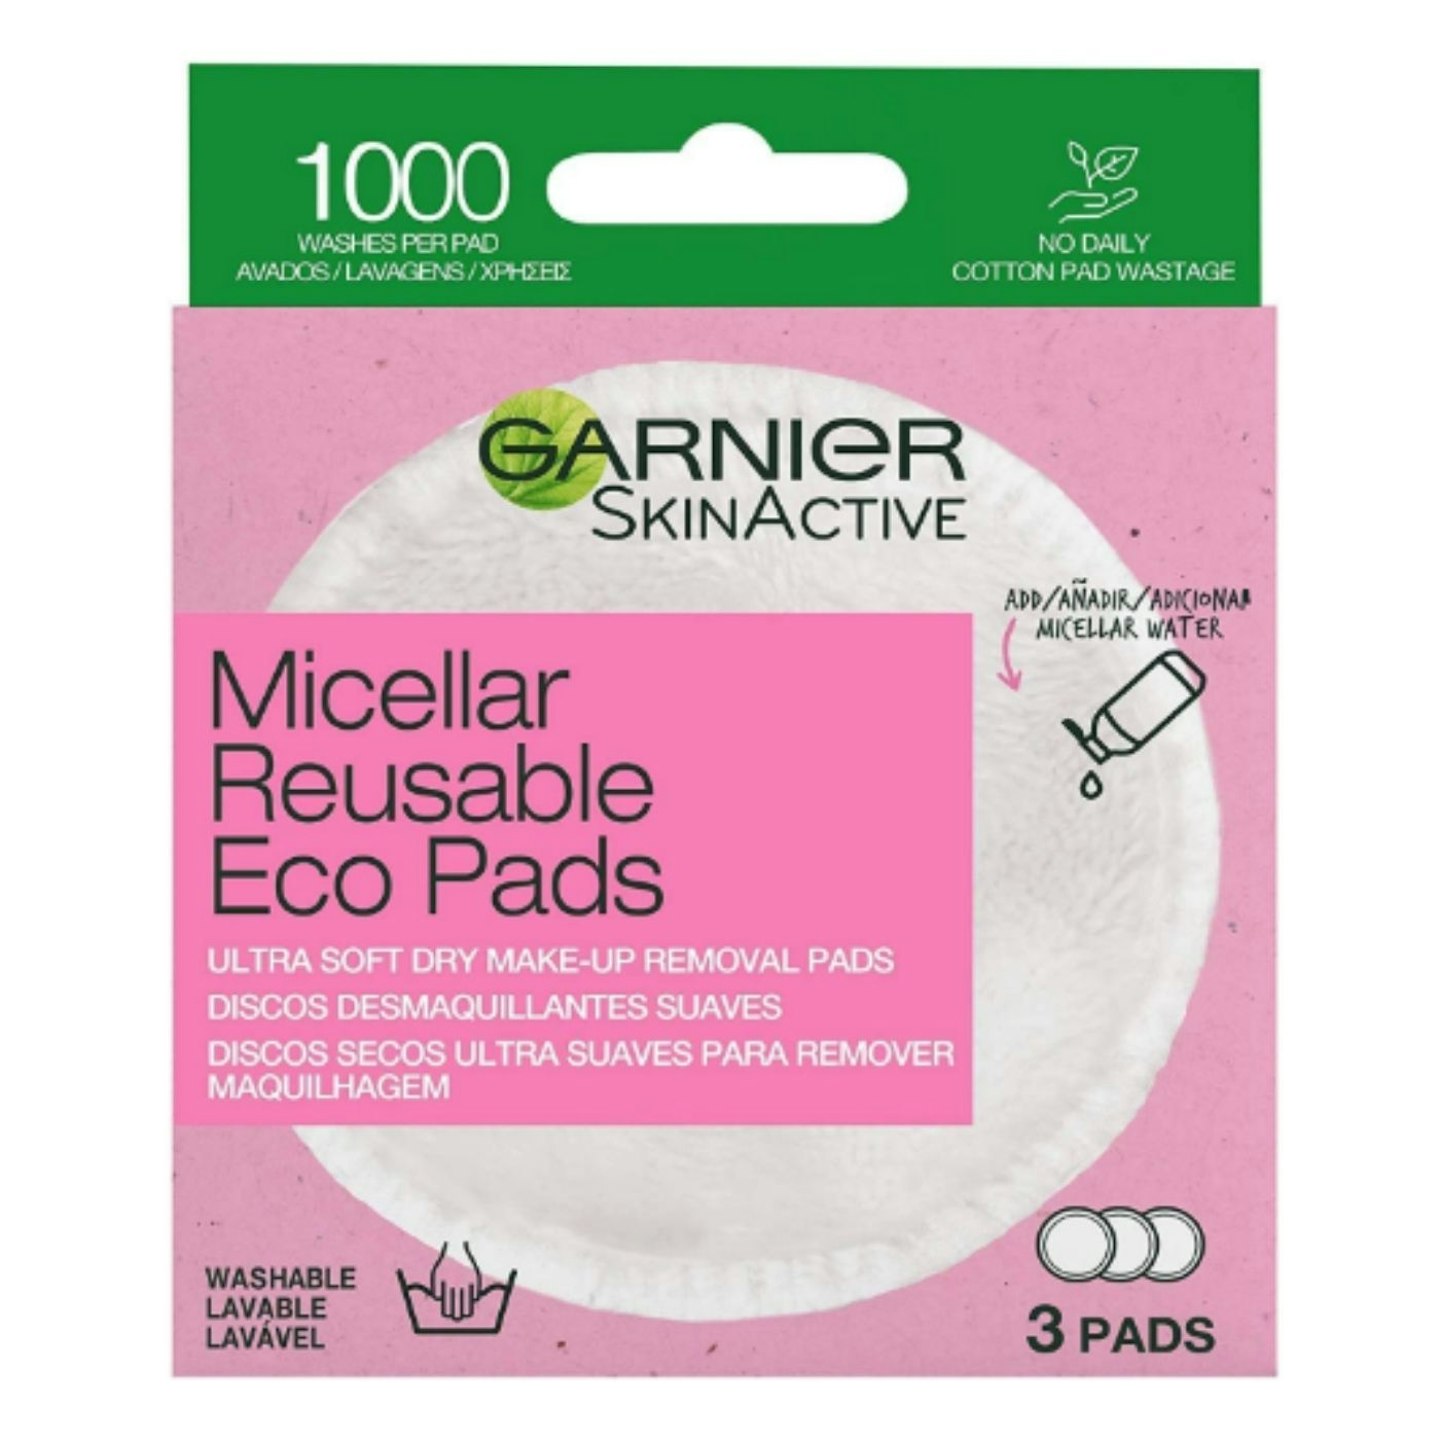 Garnier Micellar Reusable Eco Pads in box